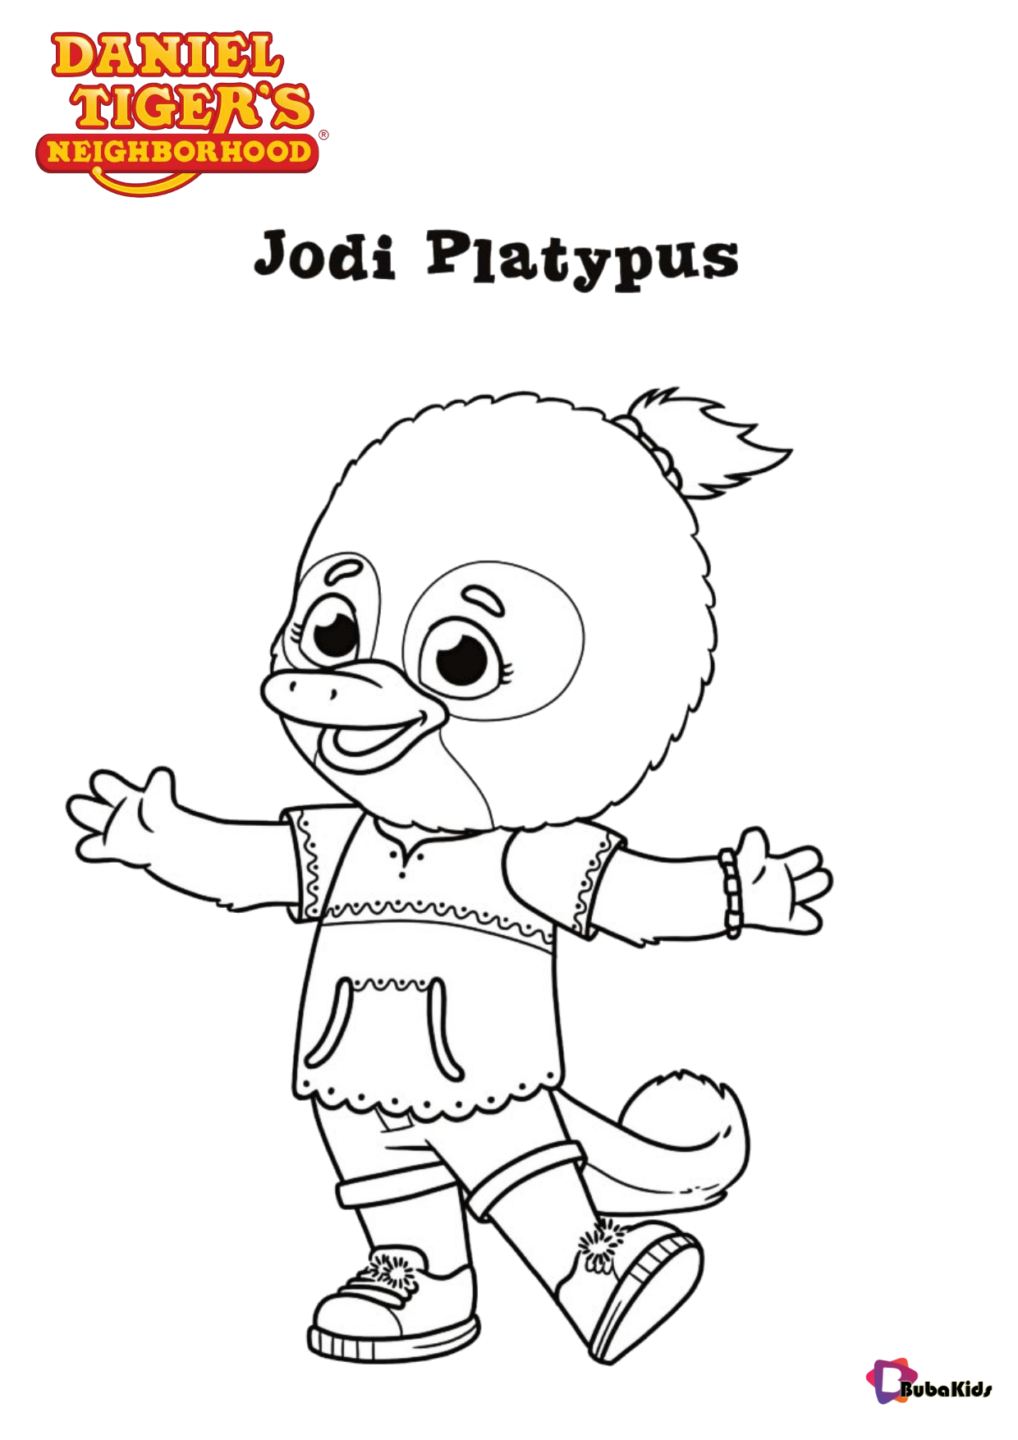 jodi platypus character daniel tigers neighborhood tv serials coloring page